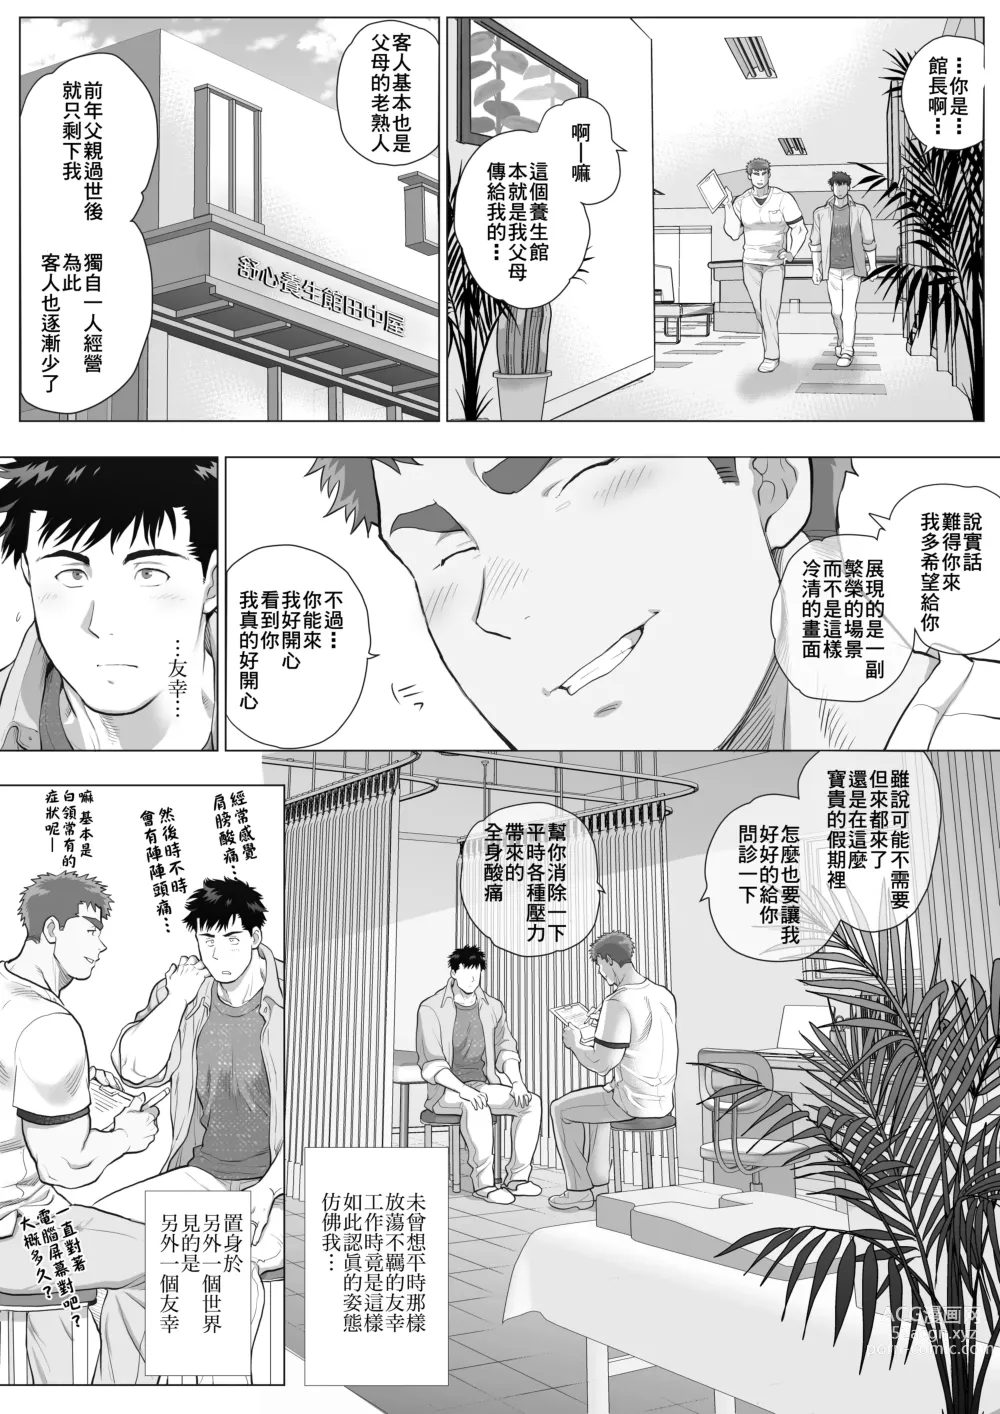 Page 5 of manga 直人爸爸与友幸爸爸 第四话